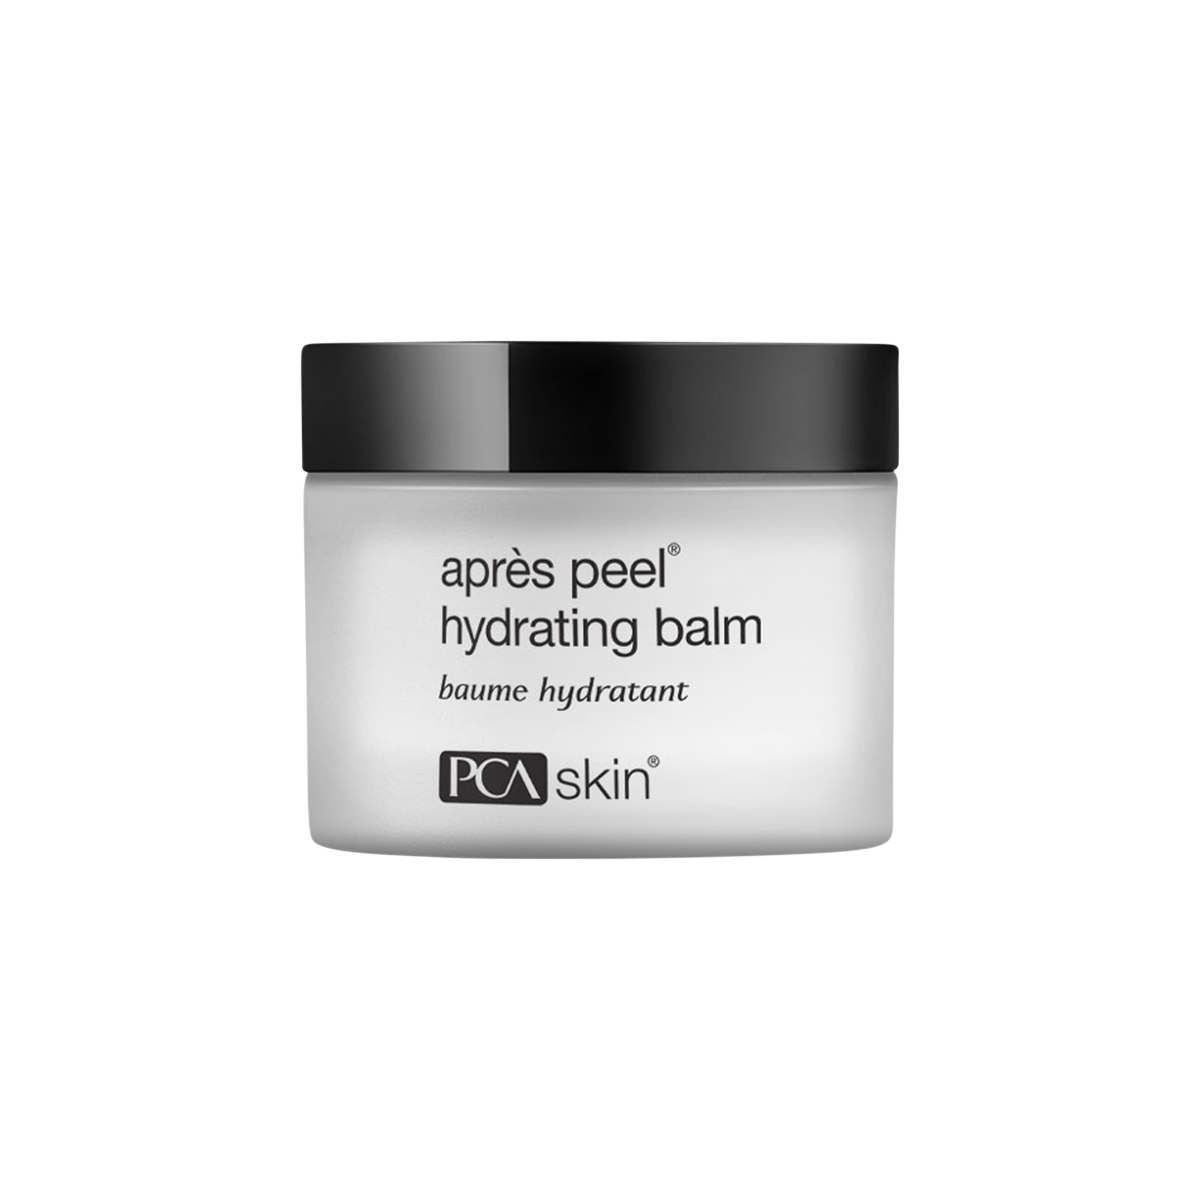 PCA Skin - Apres Peel Hydrating Balm